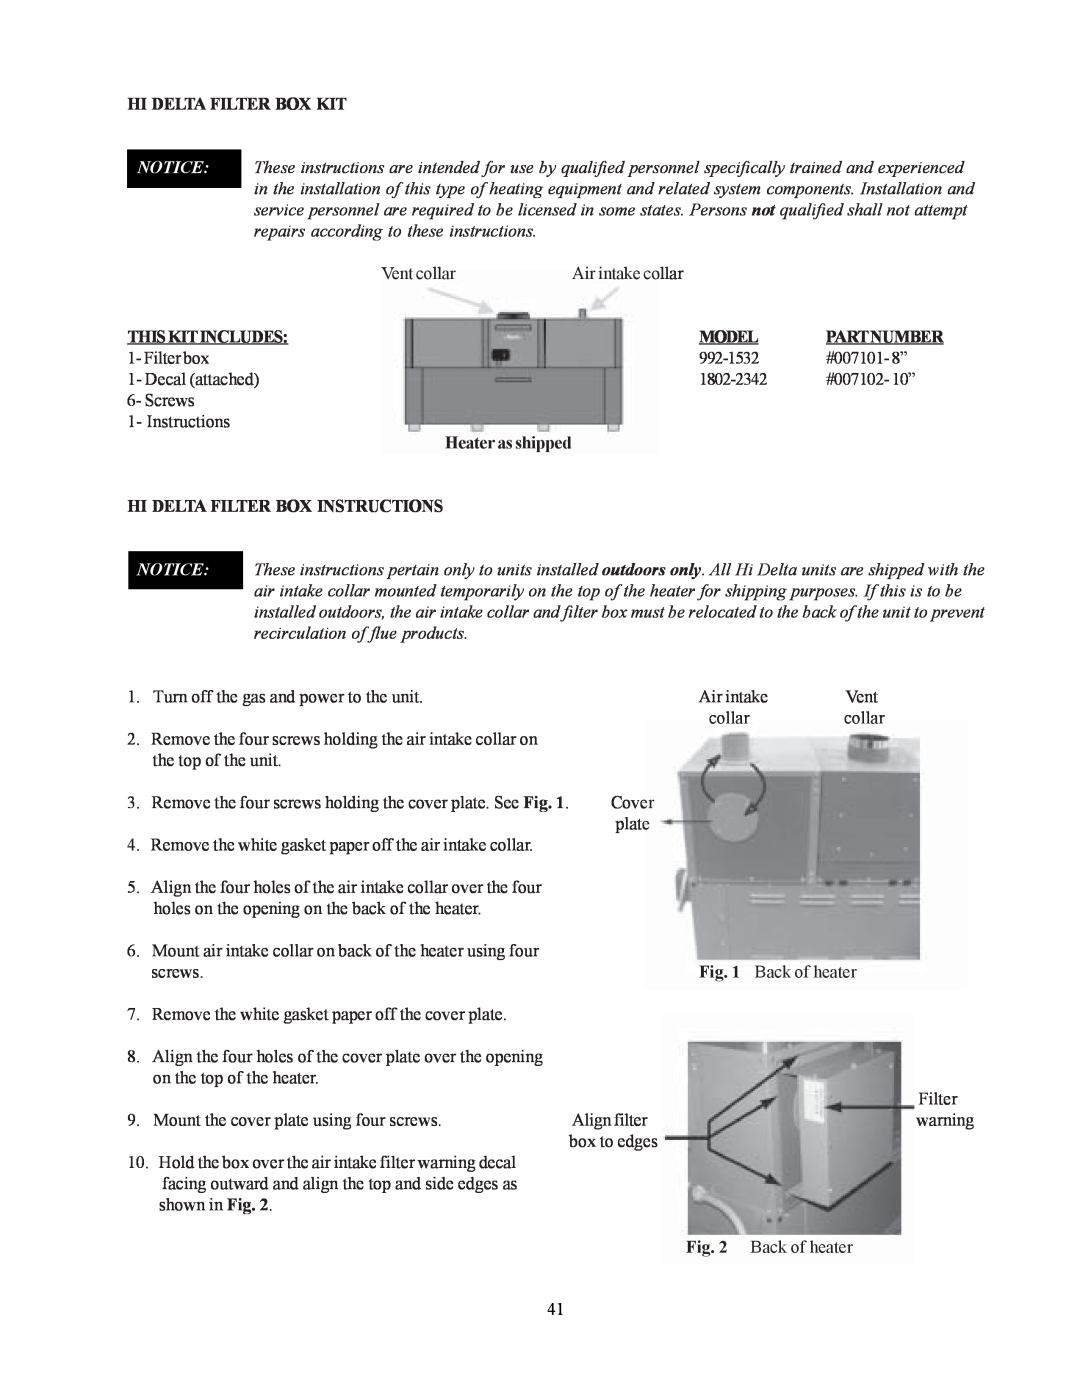 Raypak 302-902 manual Hi Delta Filter Box Kit, Thiskitincludes, Model, Partnumber, Heater as shipped 